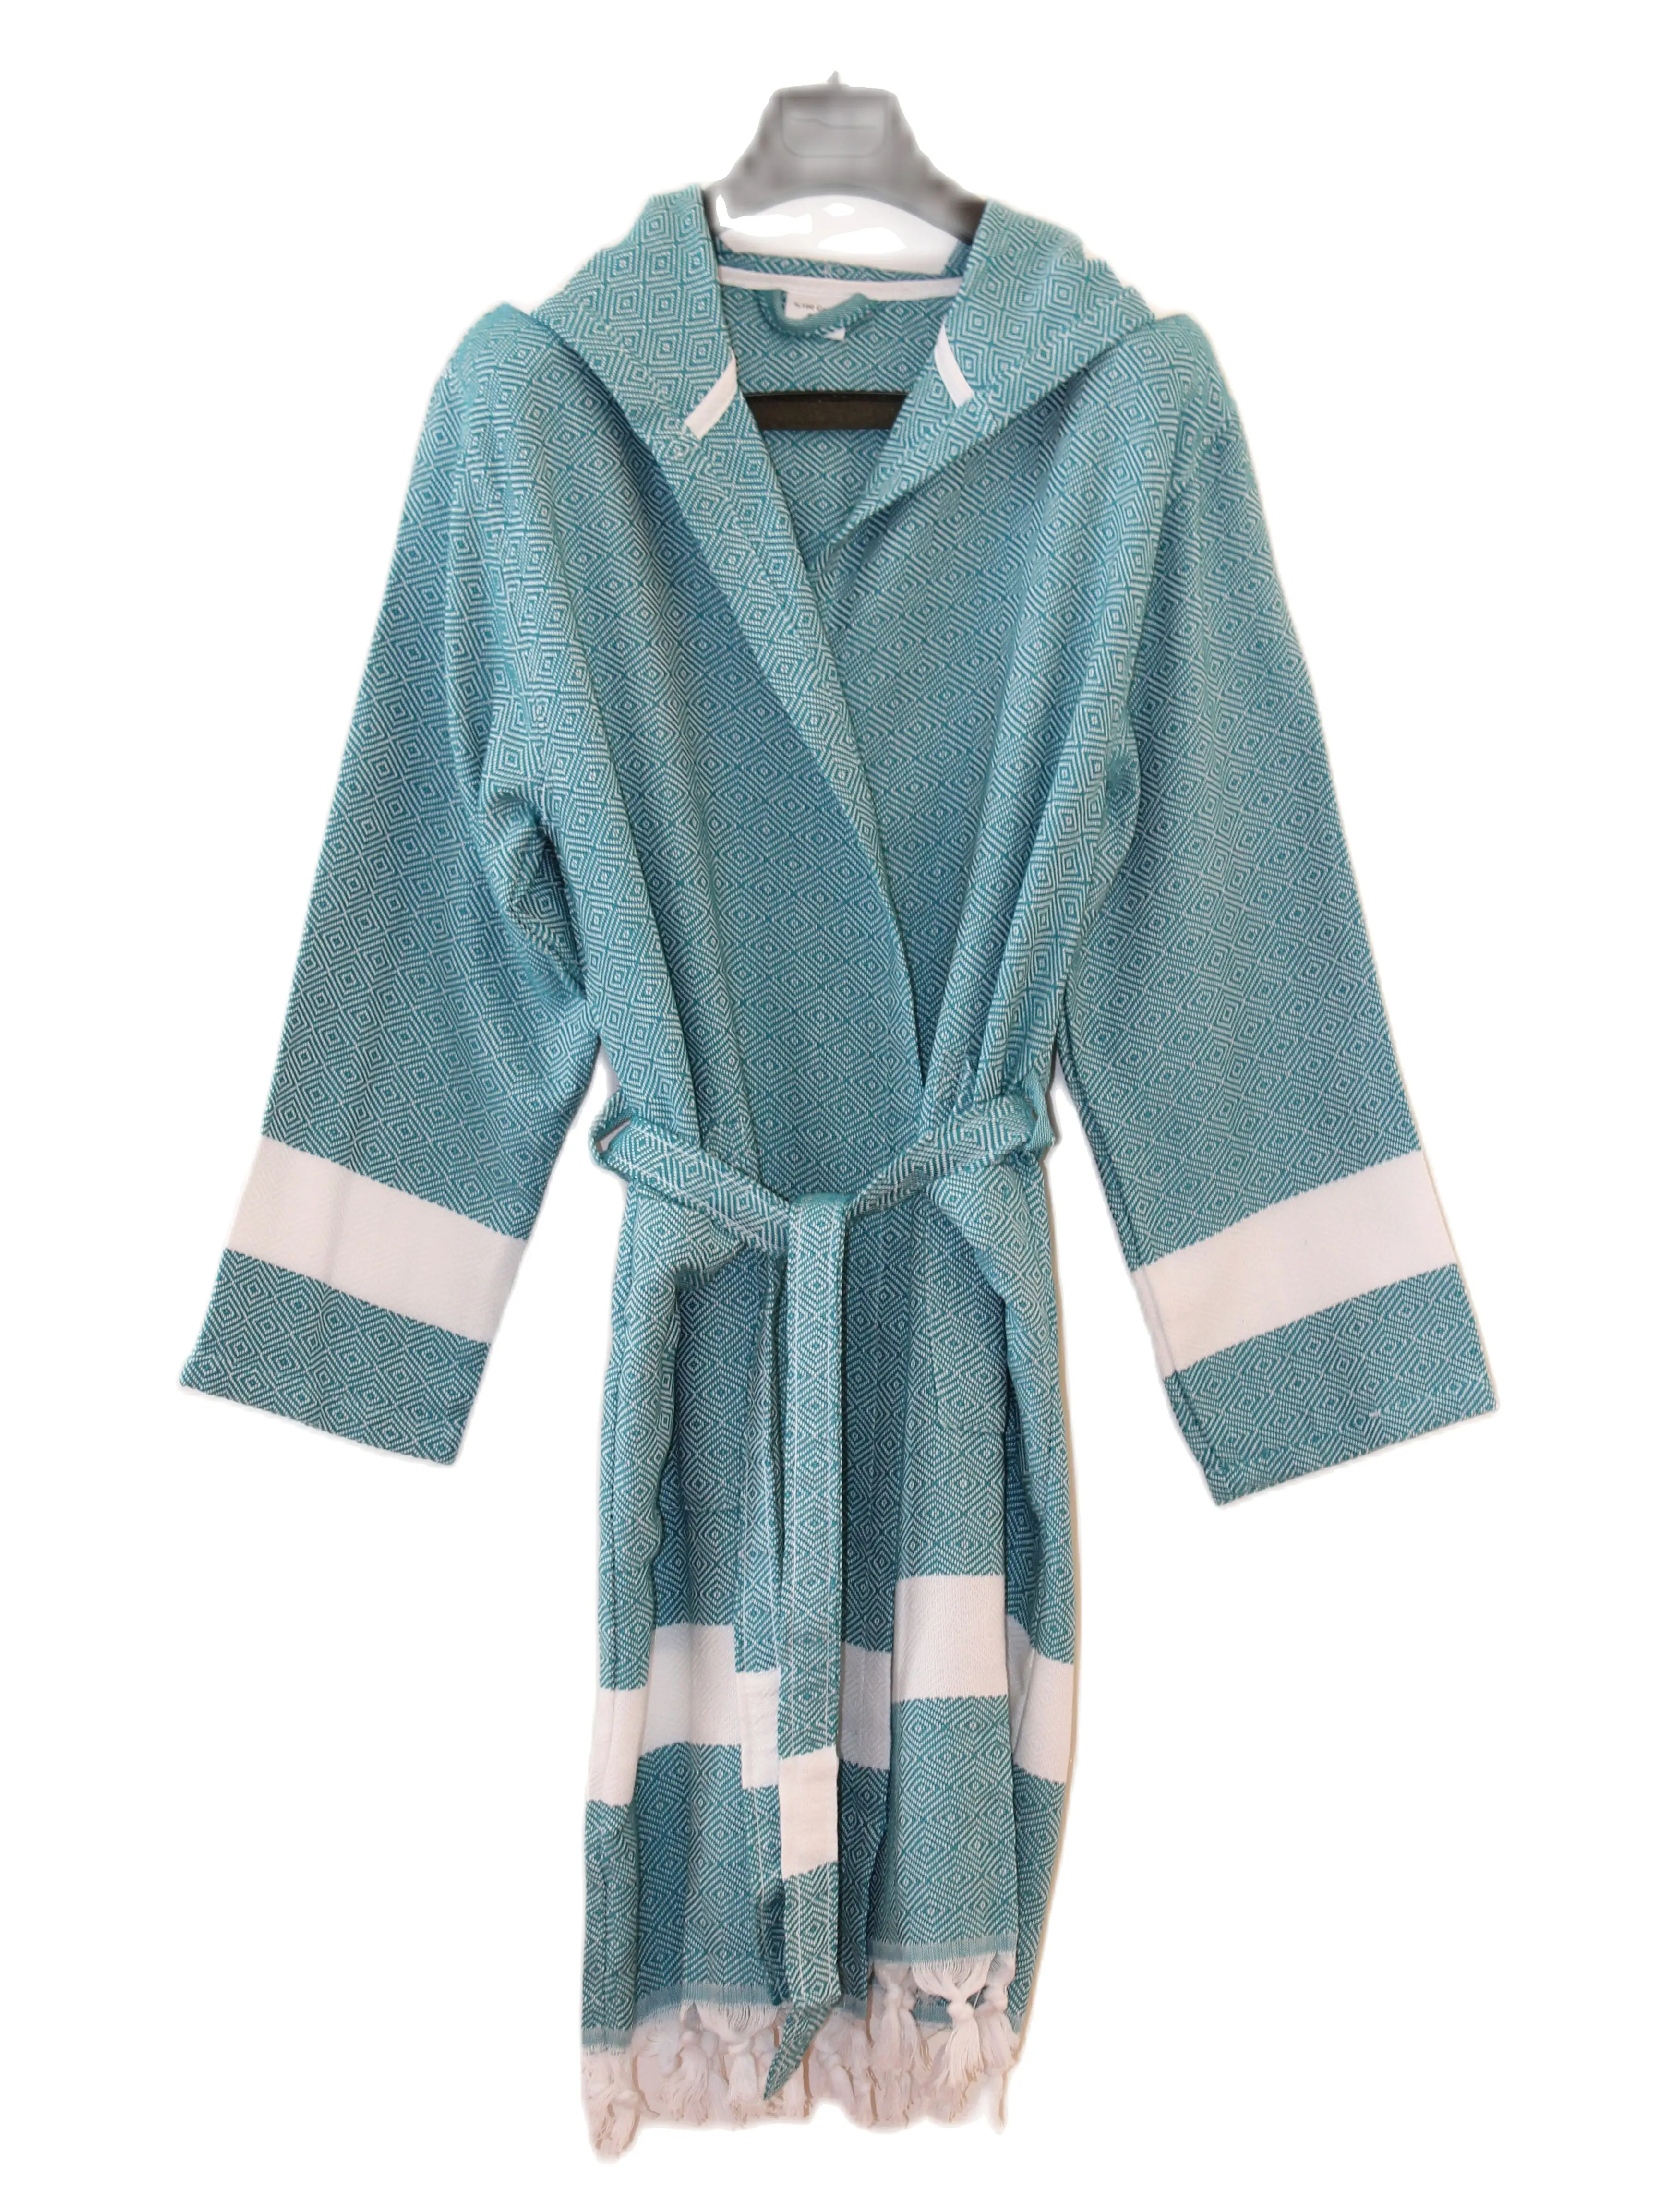 CACALA %100 Turkish Cotton Toweling Unisex Soft Hooded Luxury Bathrobe Nightrobe Sleepwear Beachrobe V-neck For Man and Women